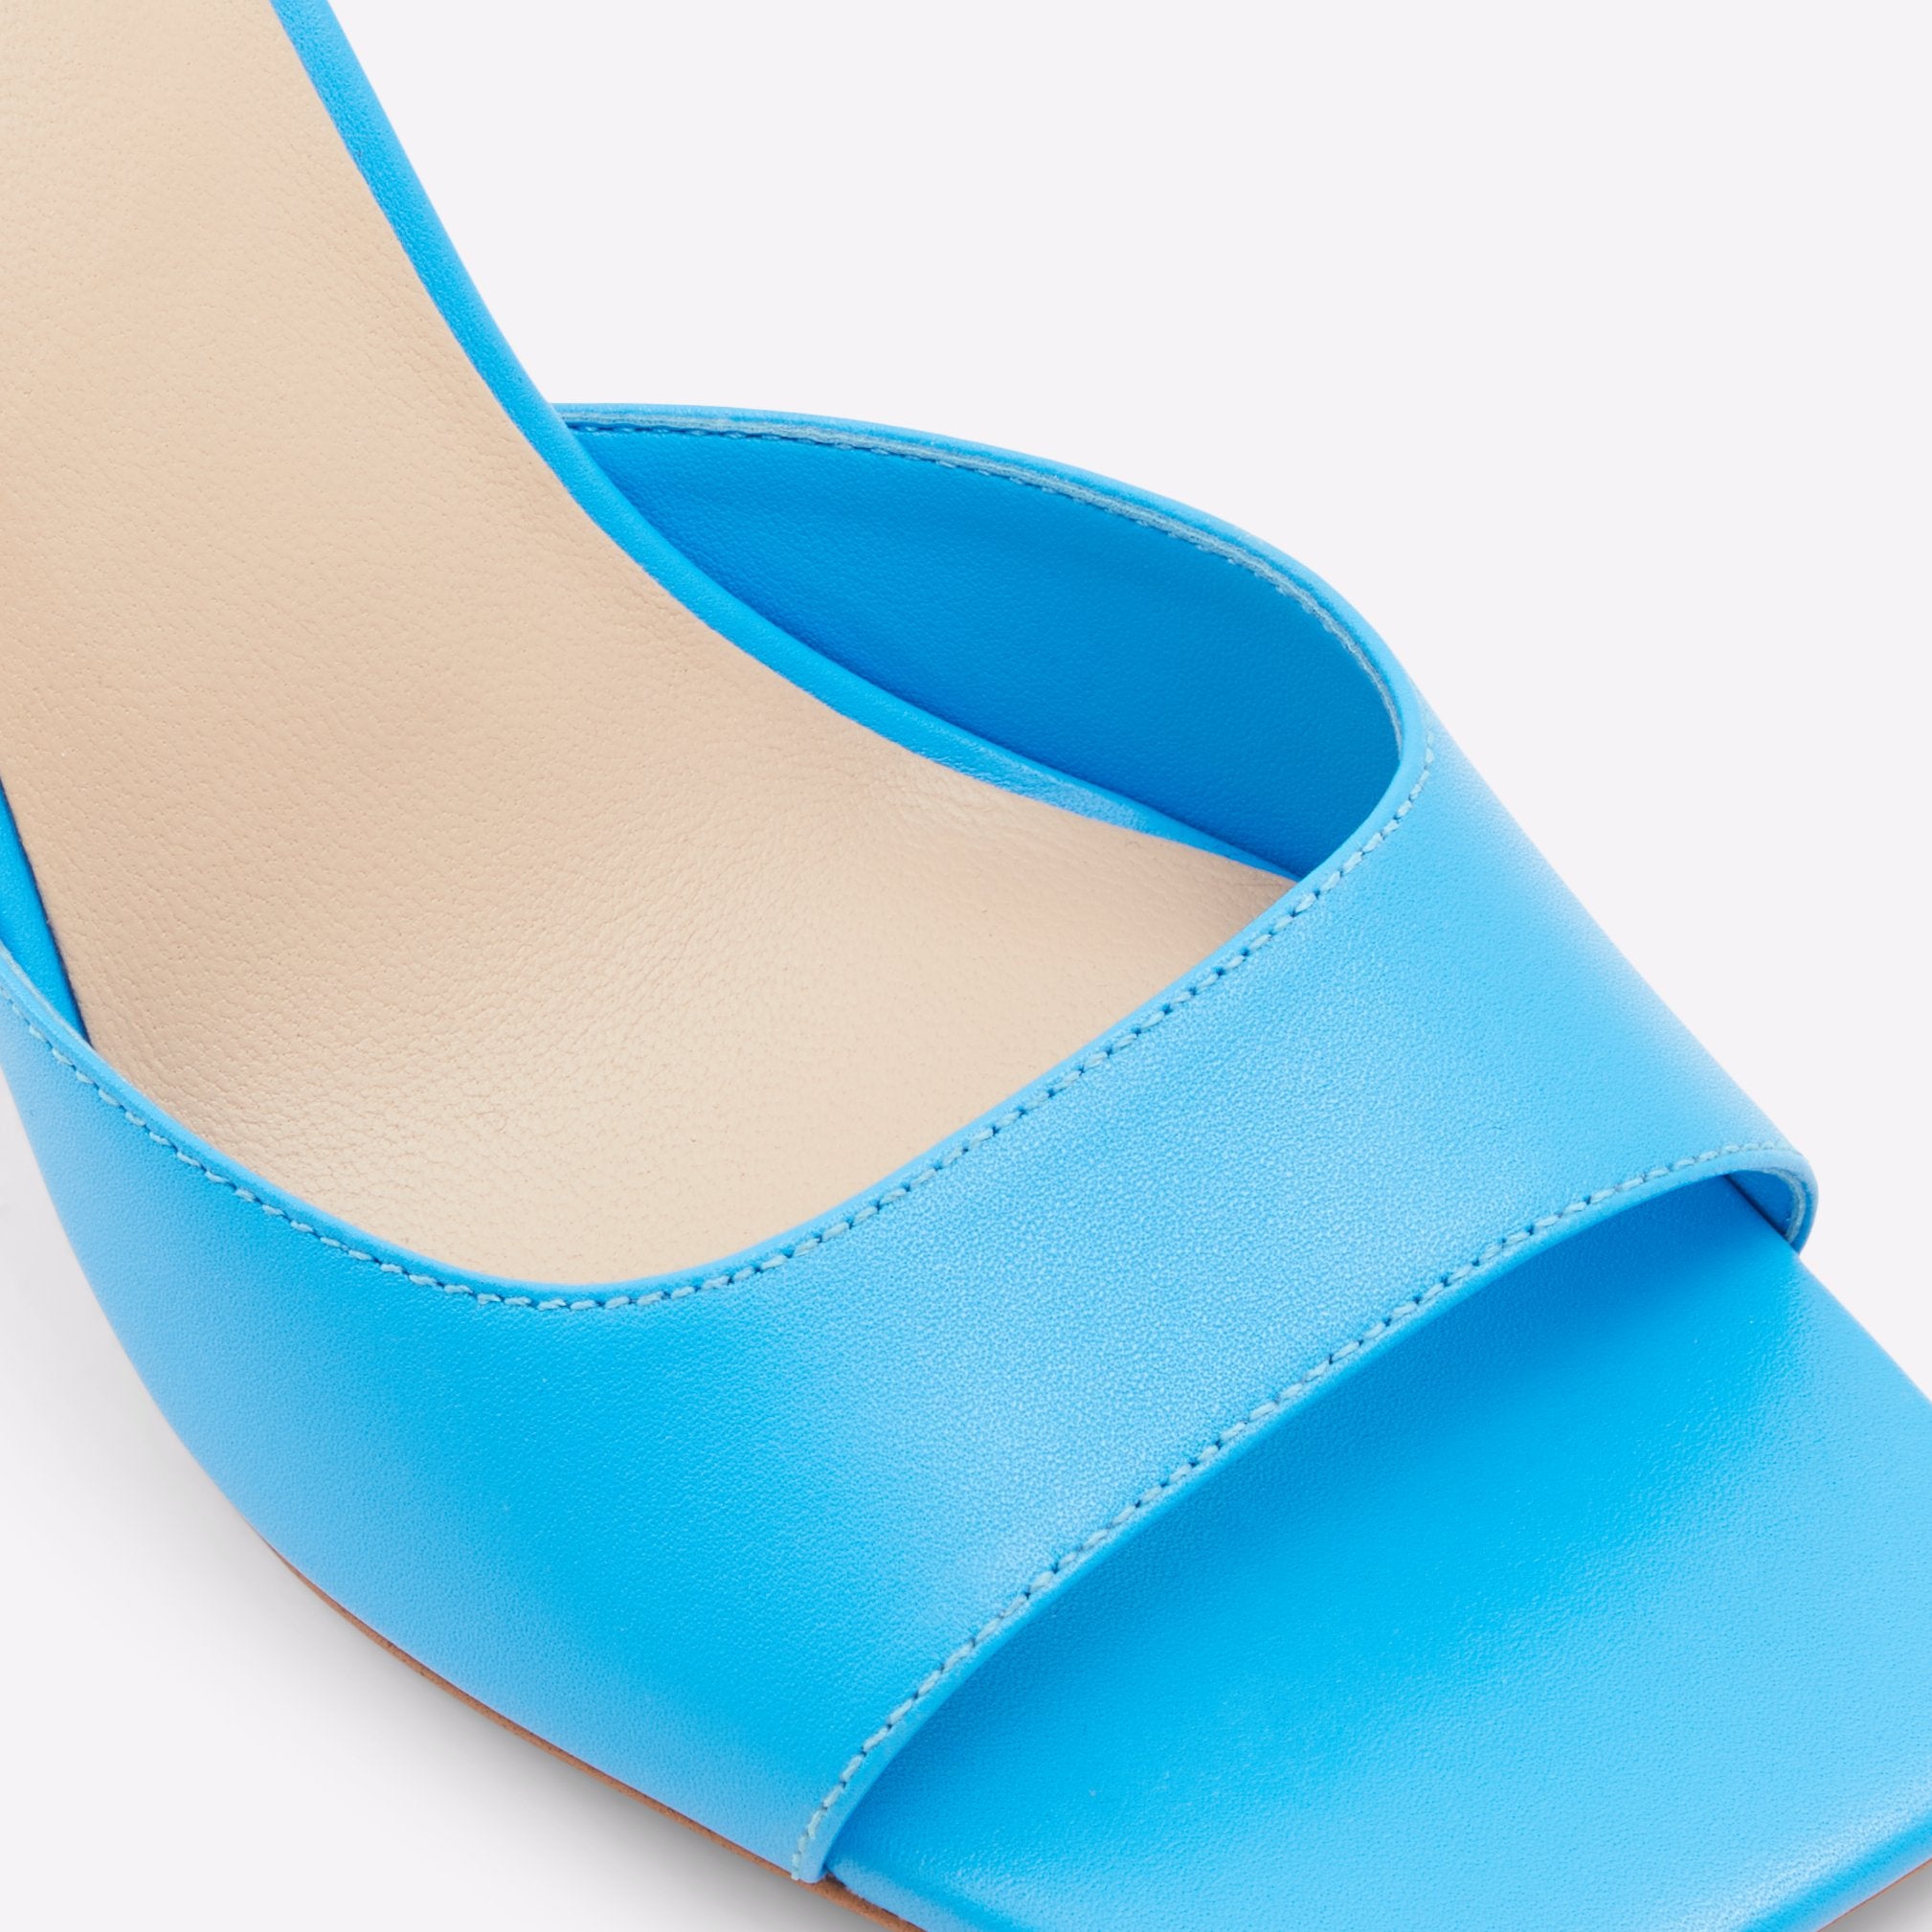 Asteama / Heeled Sandals Women Shoes - Blue - ALDO KSA